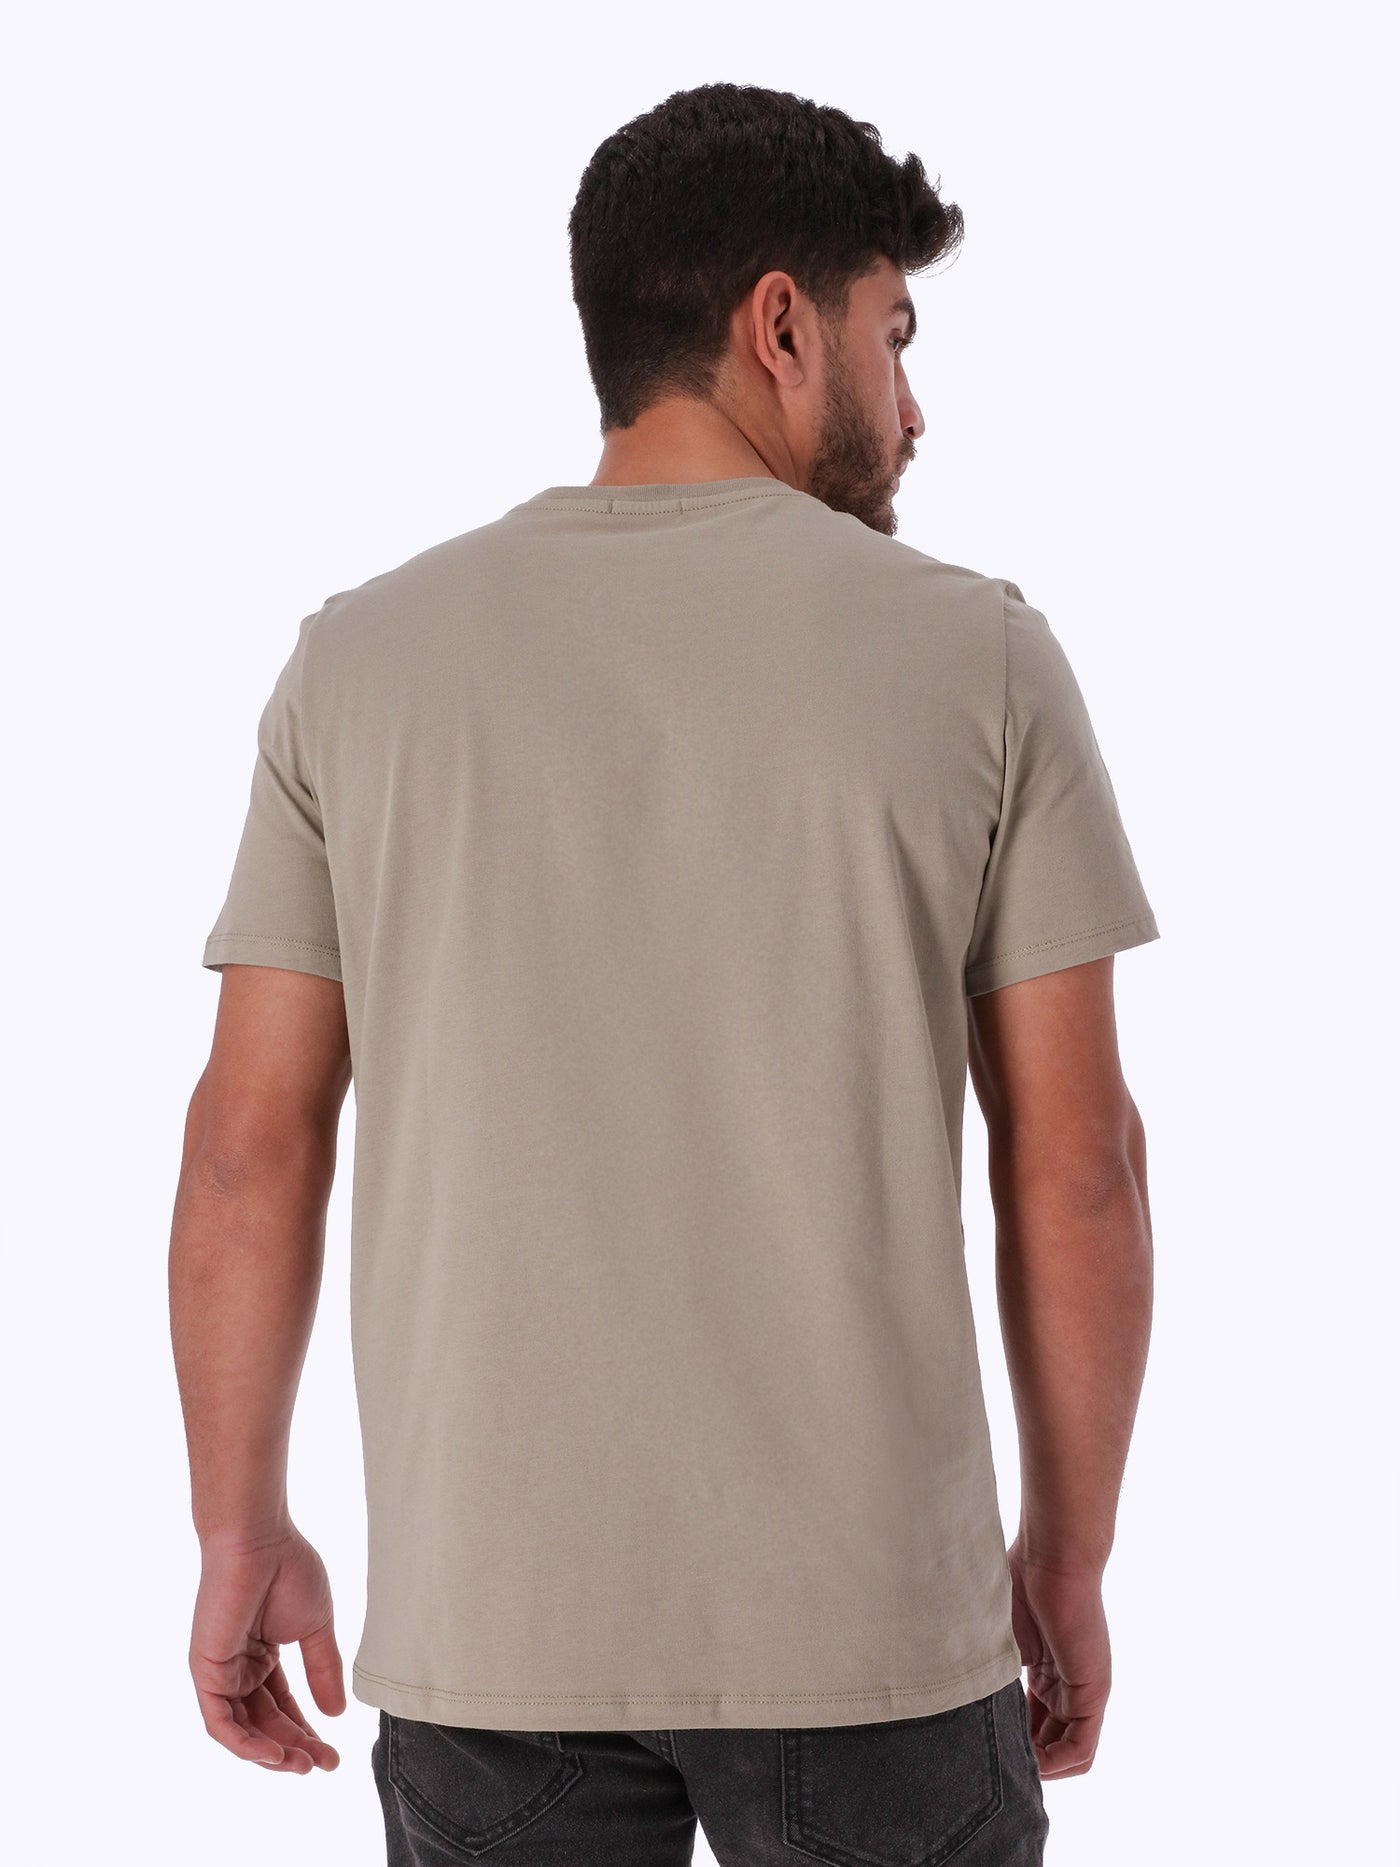 T-Shirt - Basic - Chest Pocket